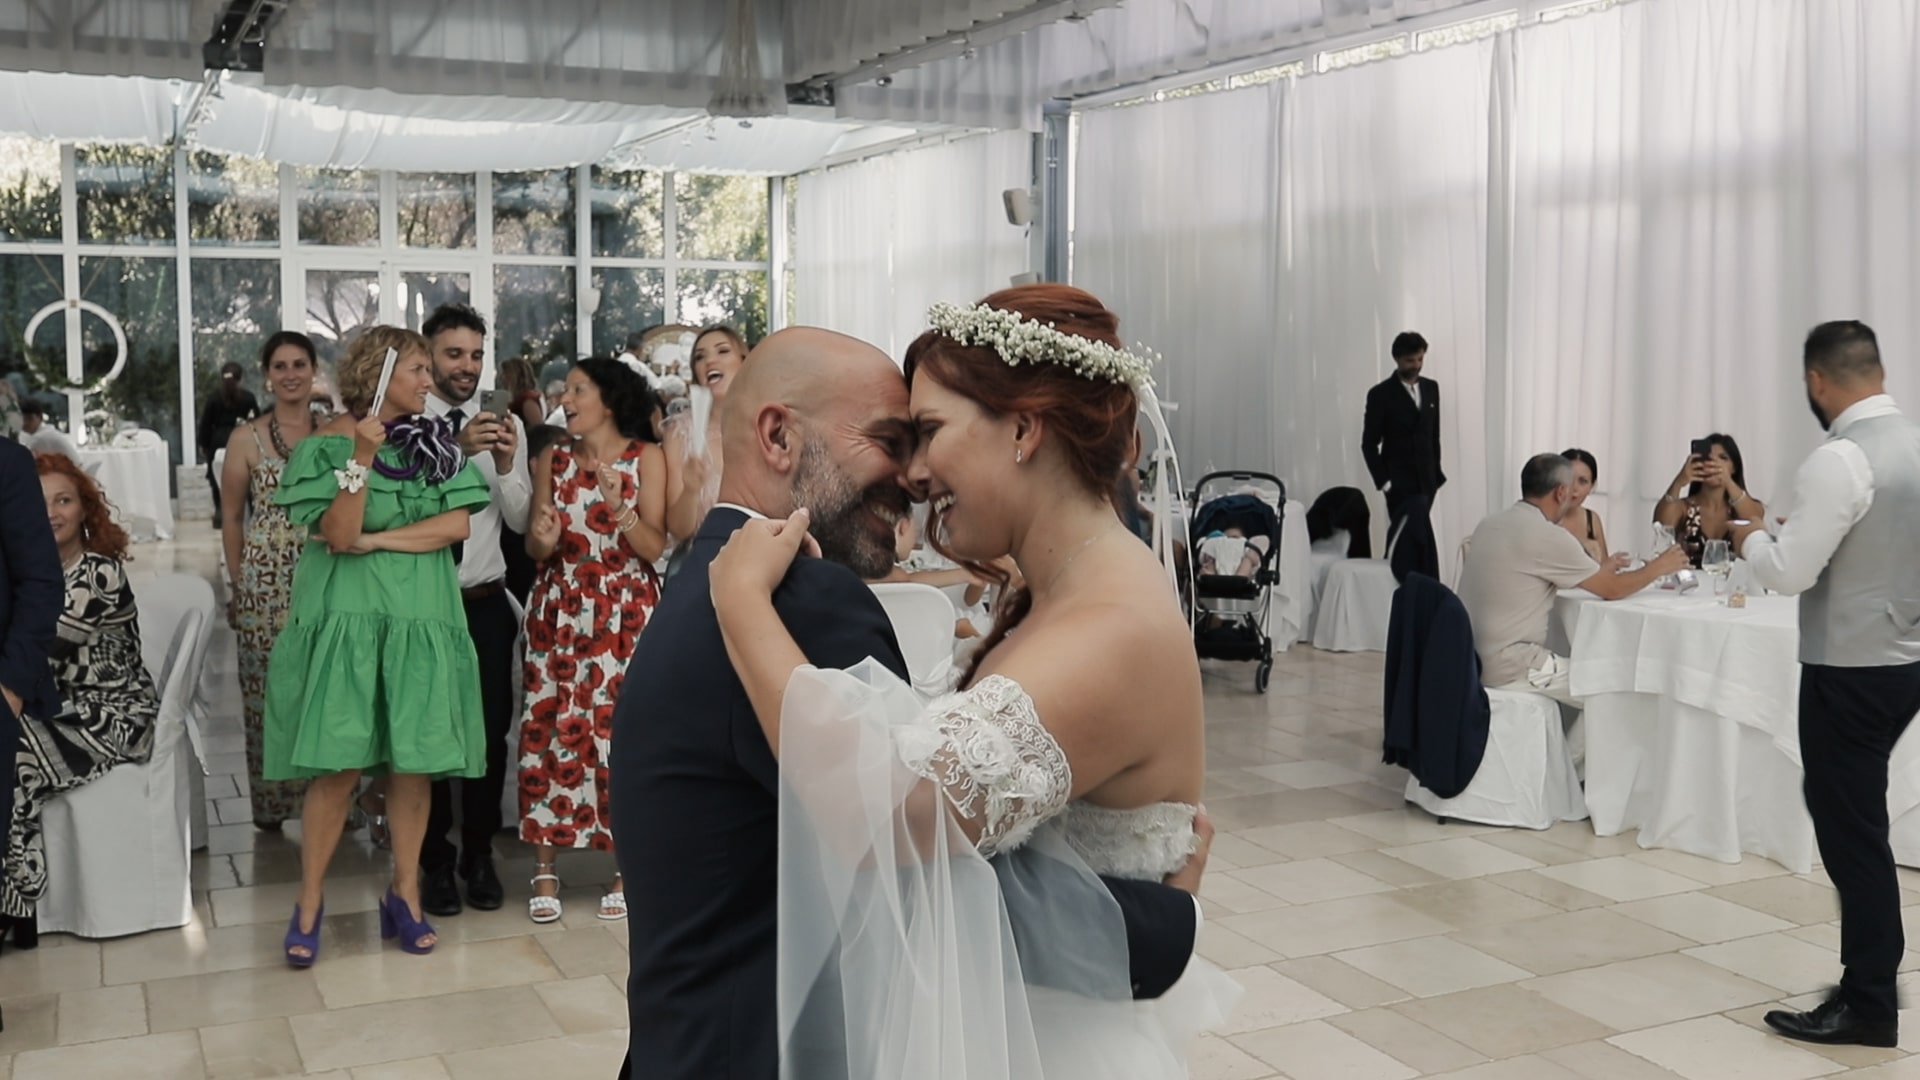 FILM.00_02_46_24.Immagine003-min Wedding in Masseria in Puglia